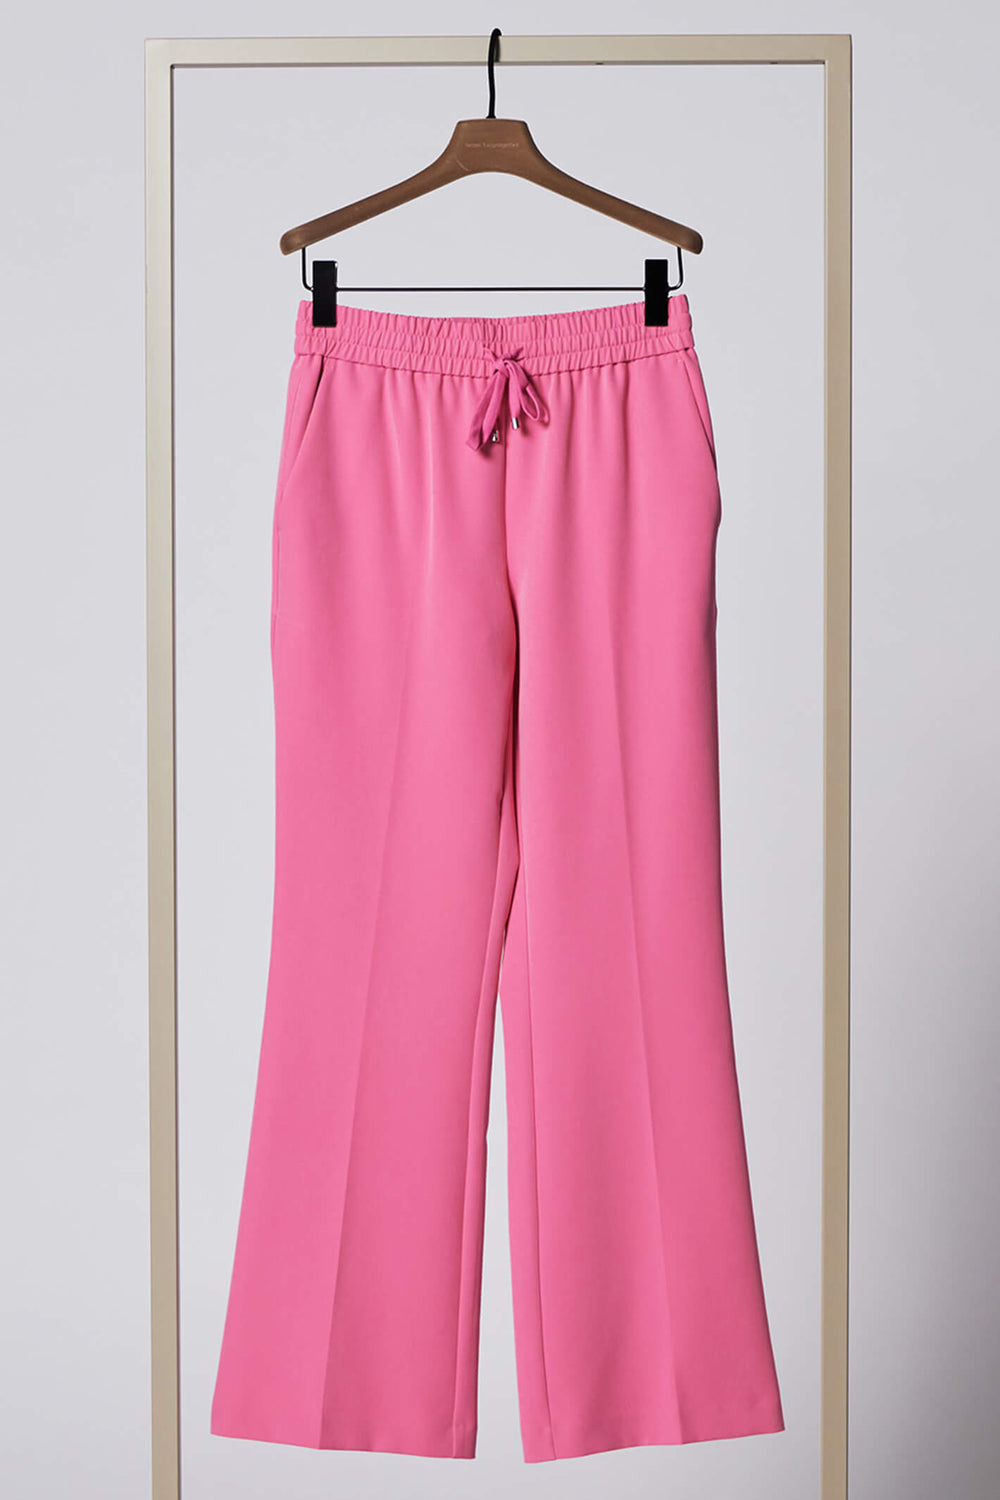 Herzen's Angelegenheit 6506 Coral Drawstring Trousers - Olivia Grace Fashion